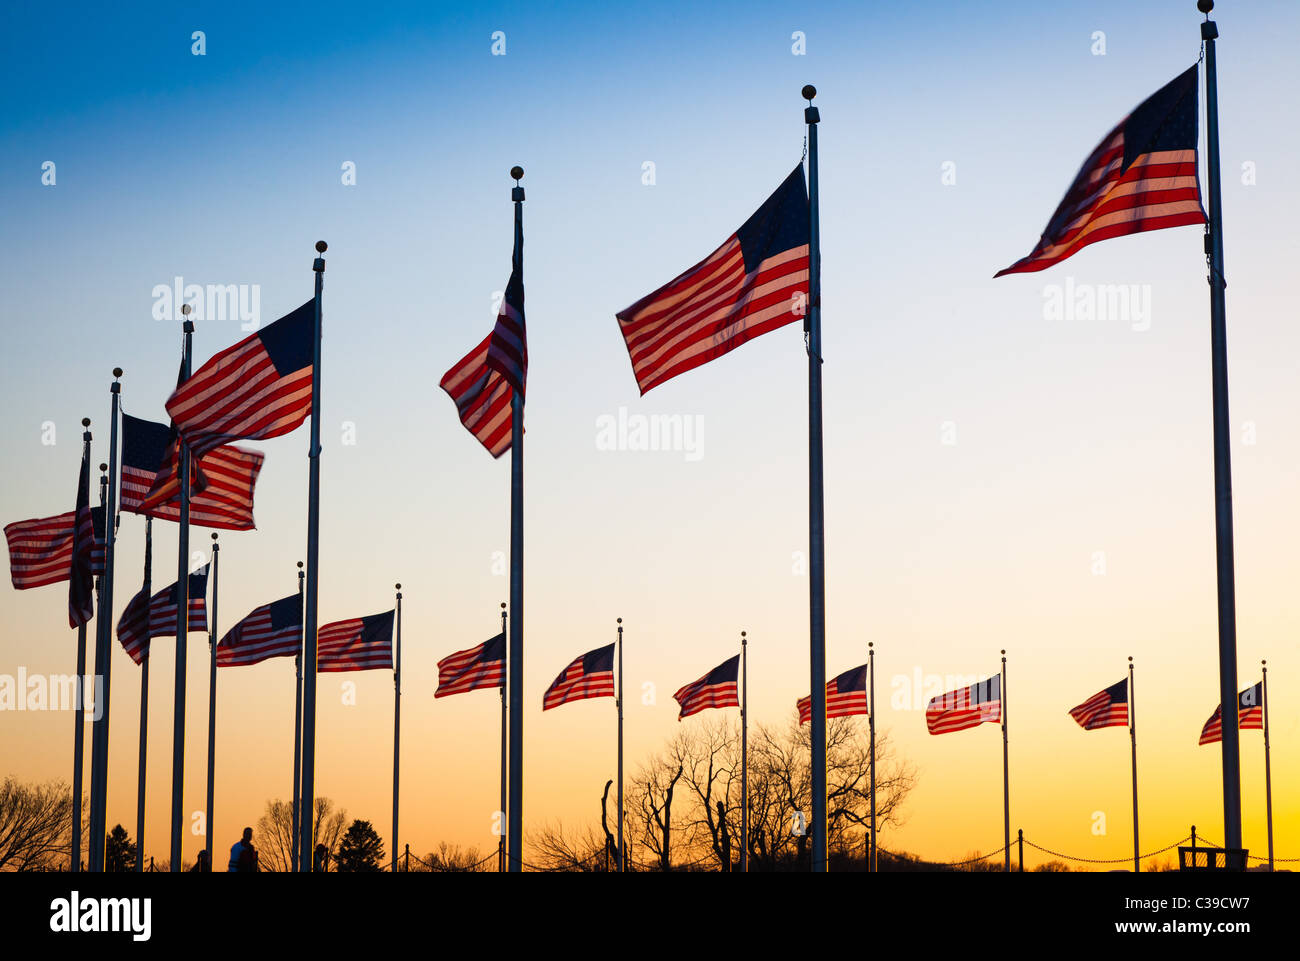 The flags surrounding the Washington Monument in Washington, DC at sunset Stock Photo